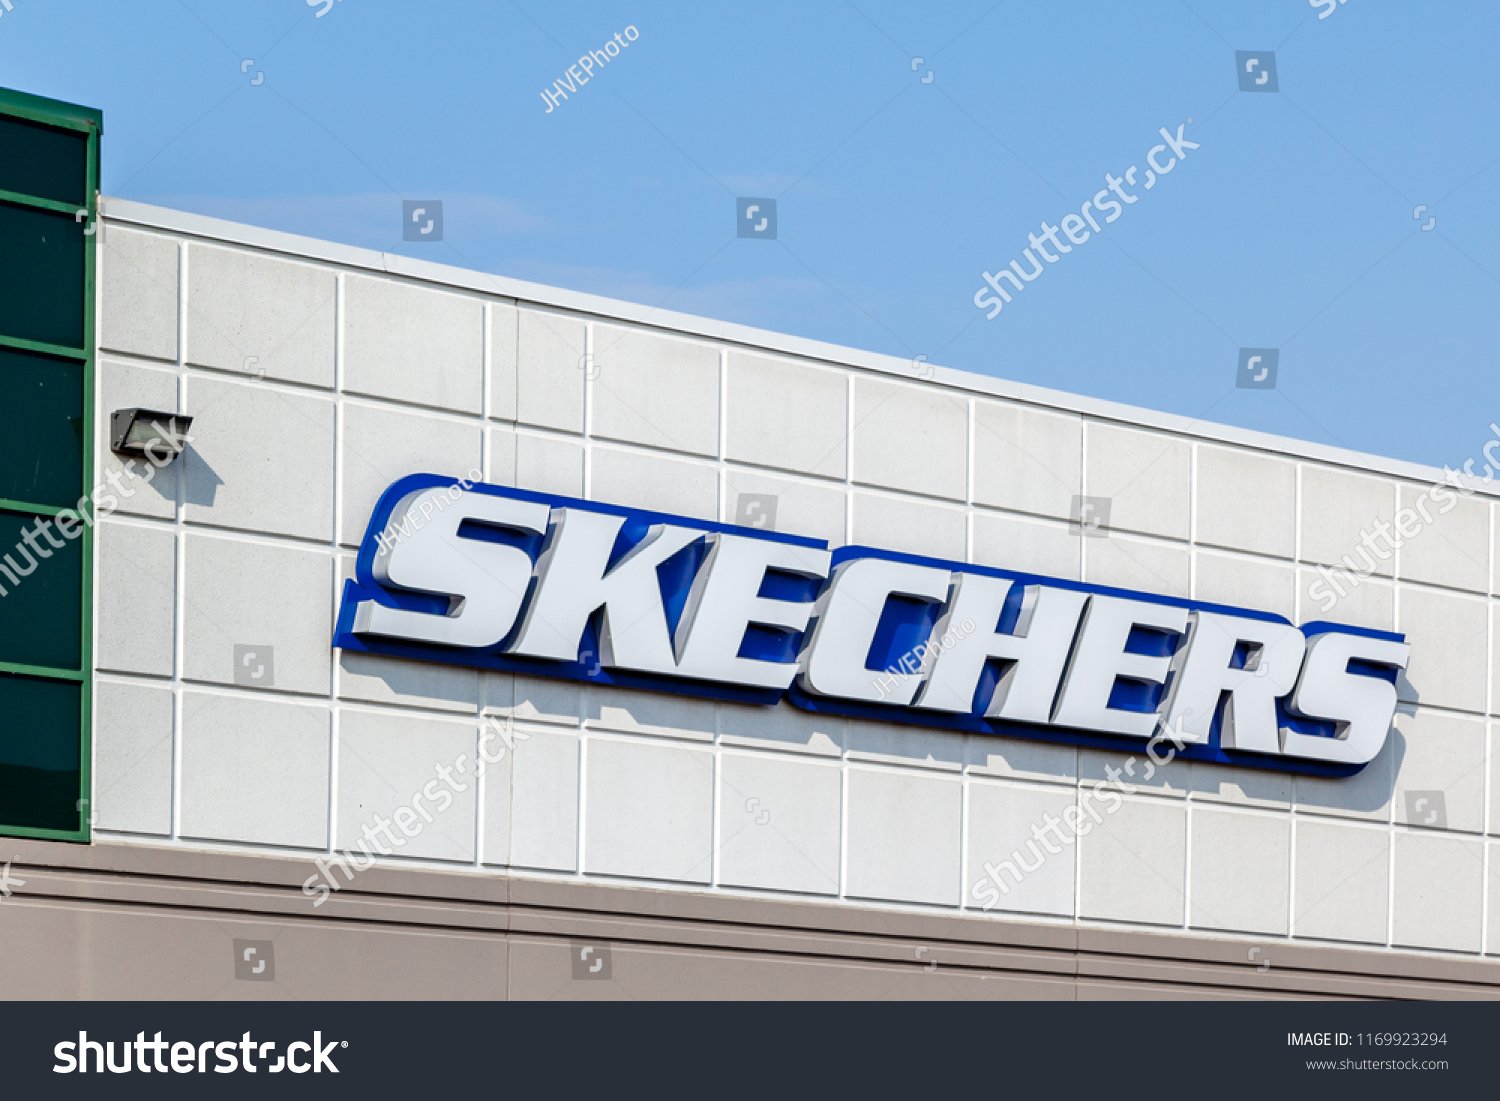 skechers corporate office